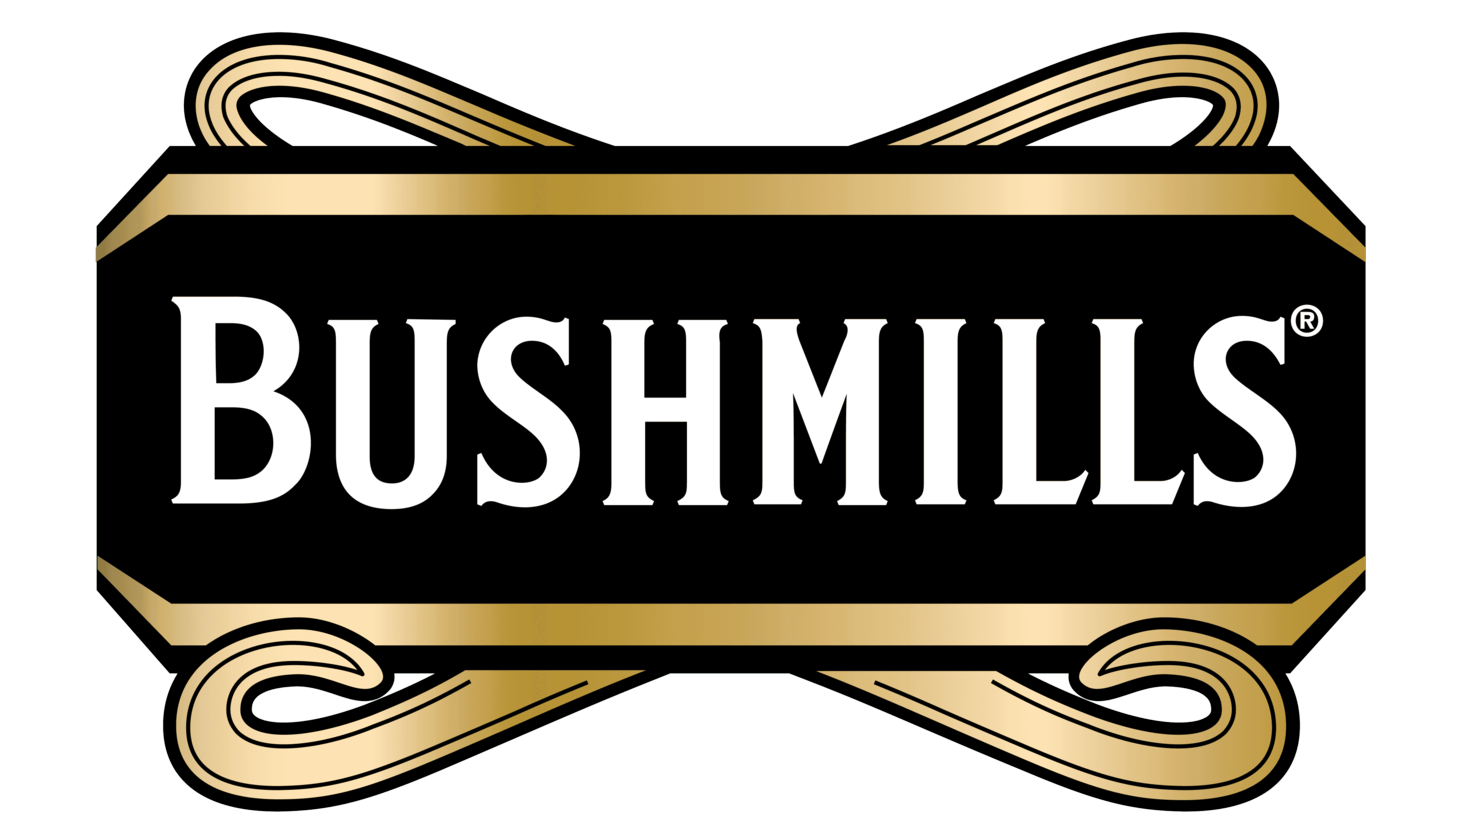 Bushmills sign